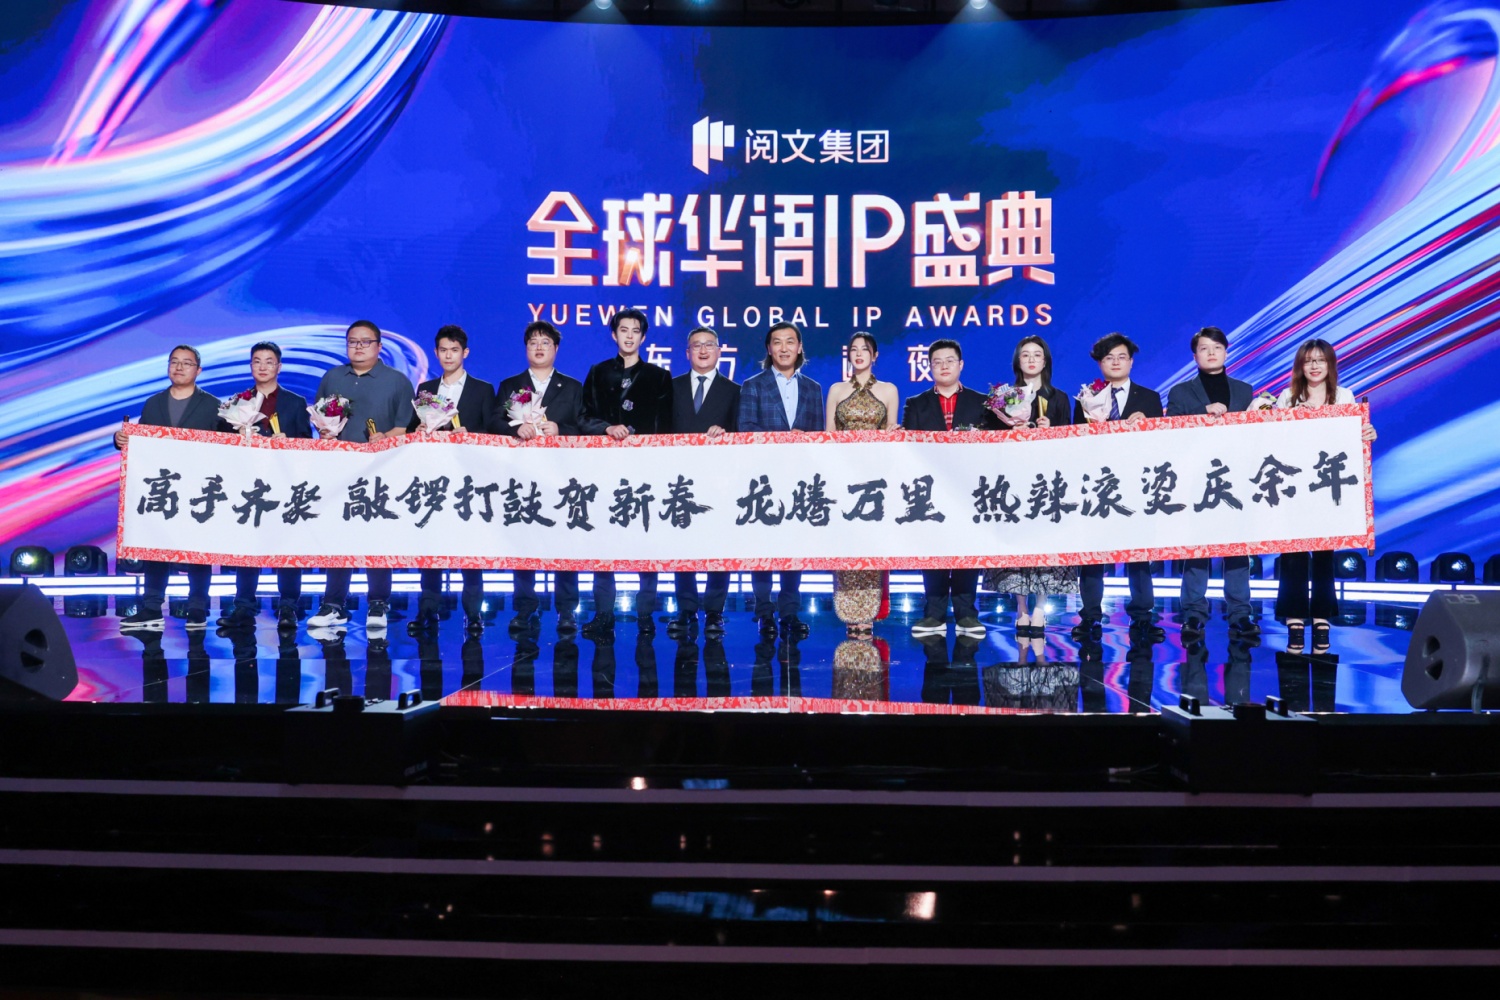 Yuewen Global IP Awards Ceromony